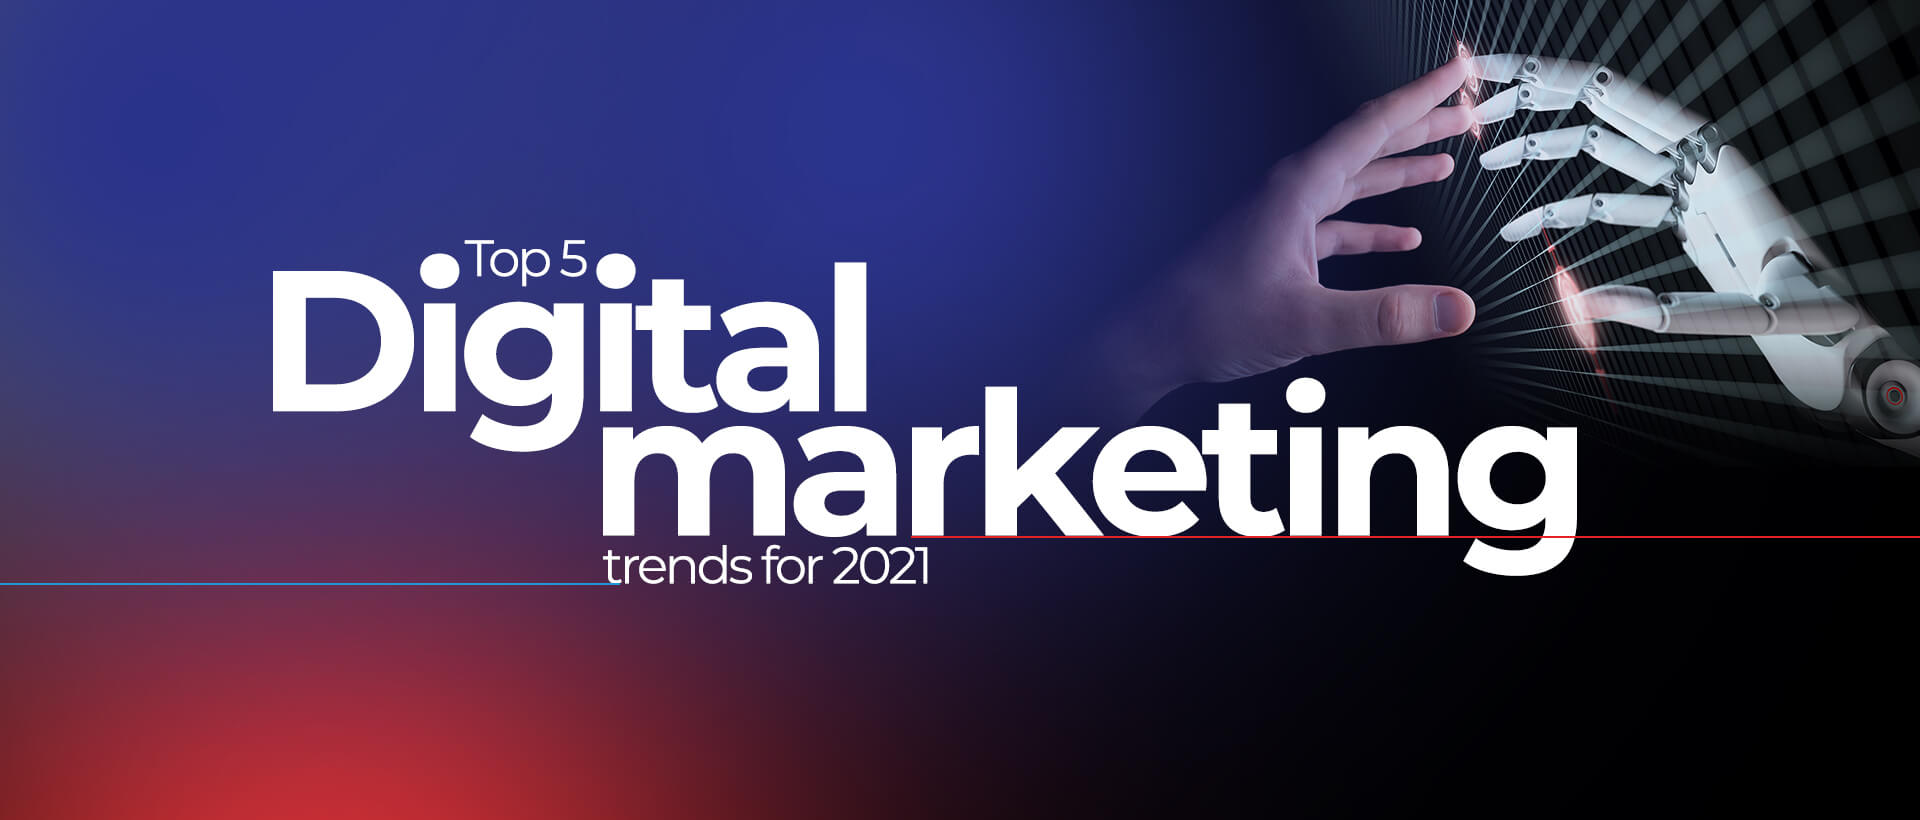 Top 5 Digital marketing trends for 2021